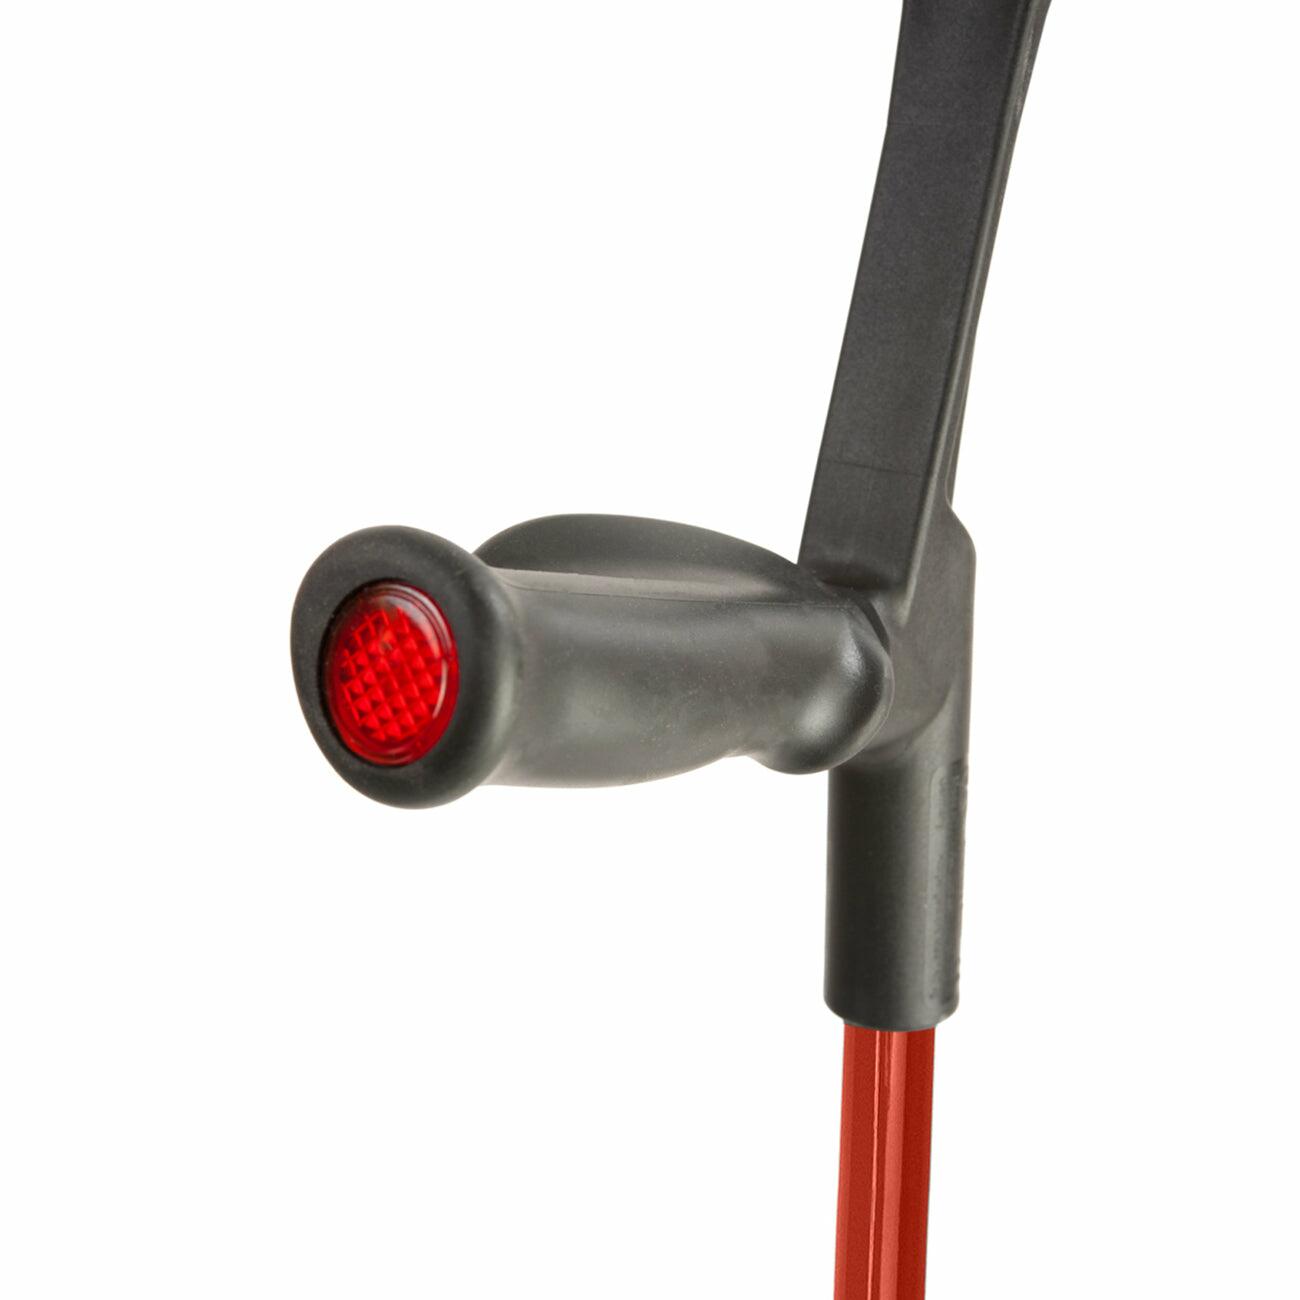 Comfort grip handle of a red Flexyfoot Comfort Grip Open Cuff Crutch